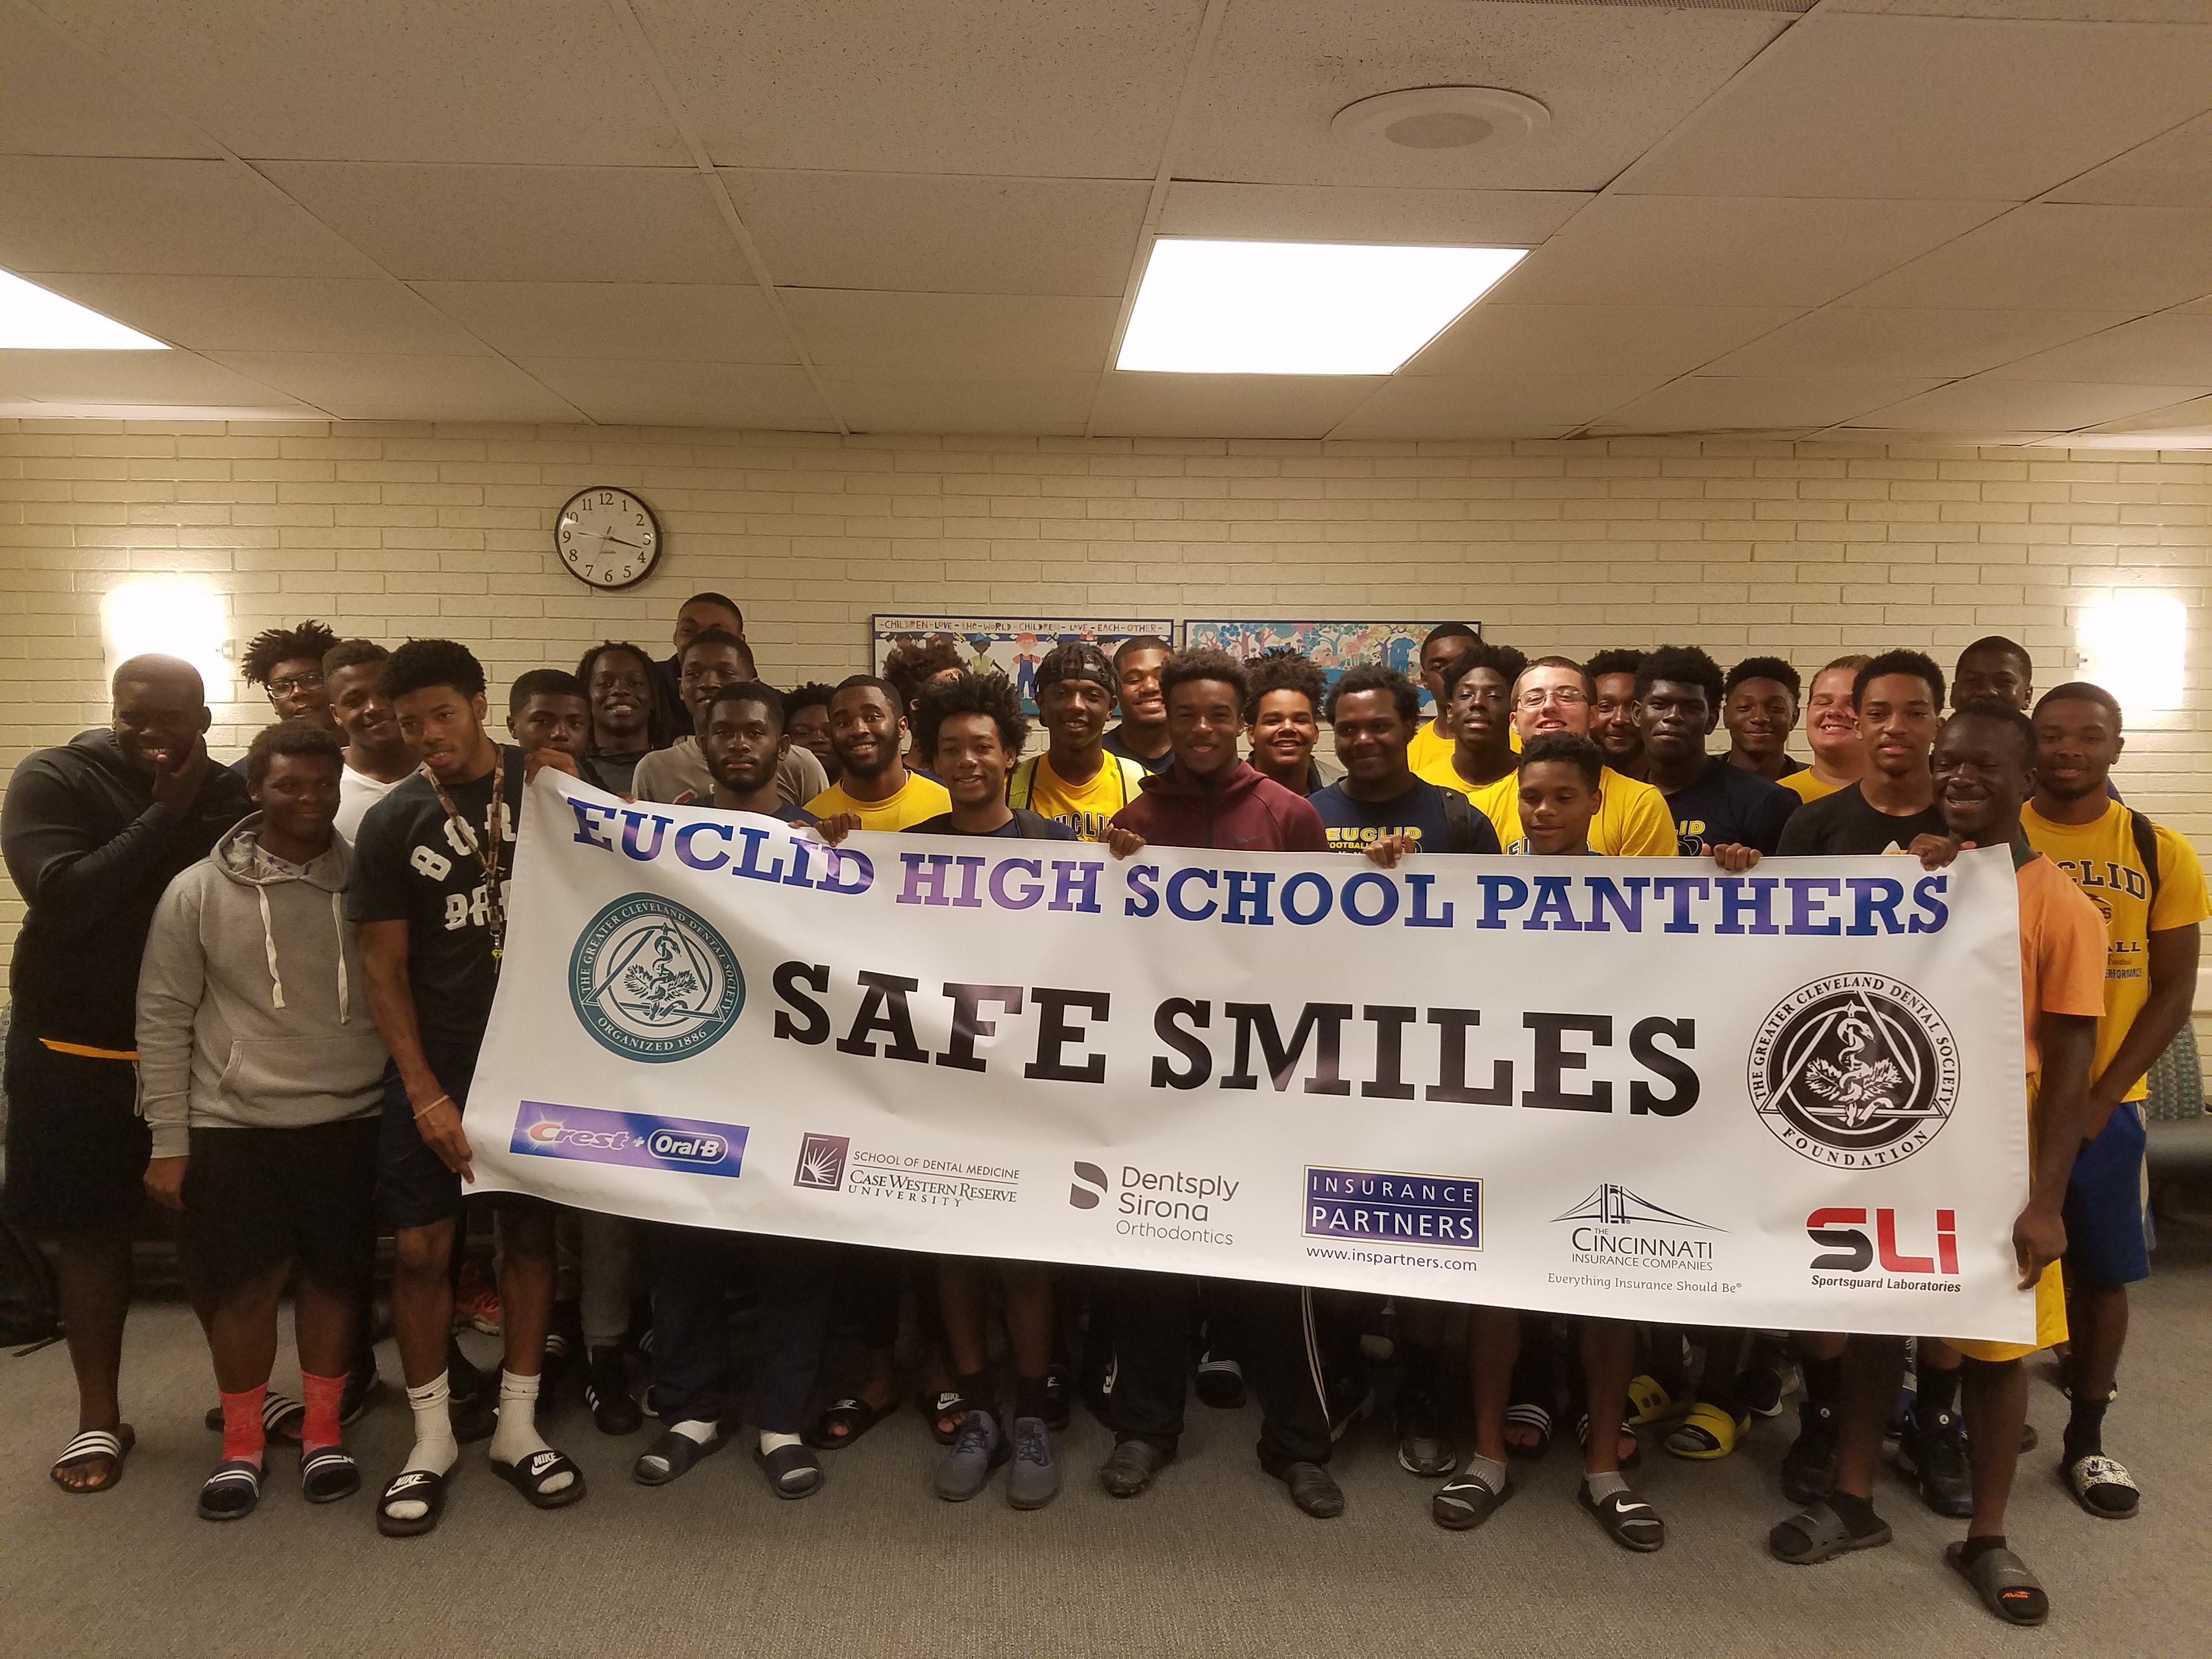 Safe Smiles at Euclid Hight Schol